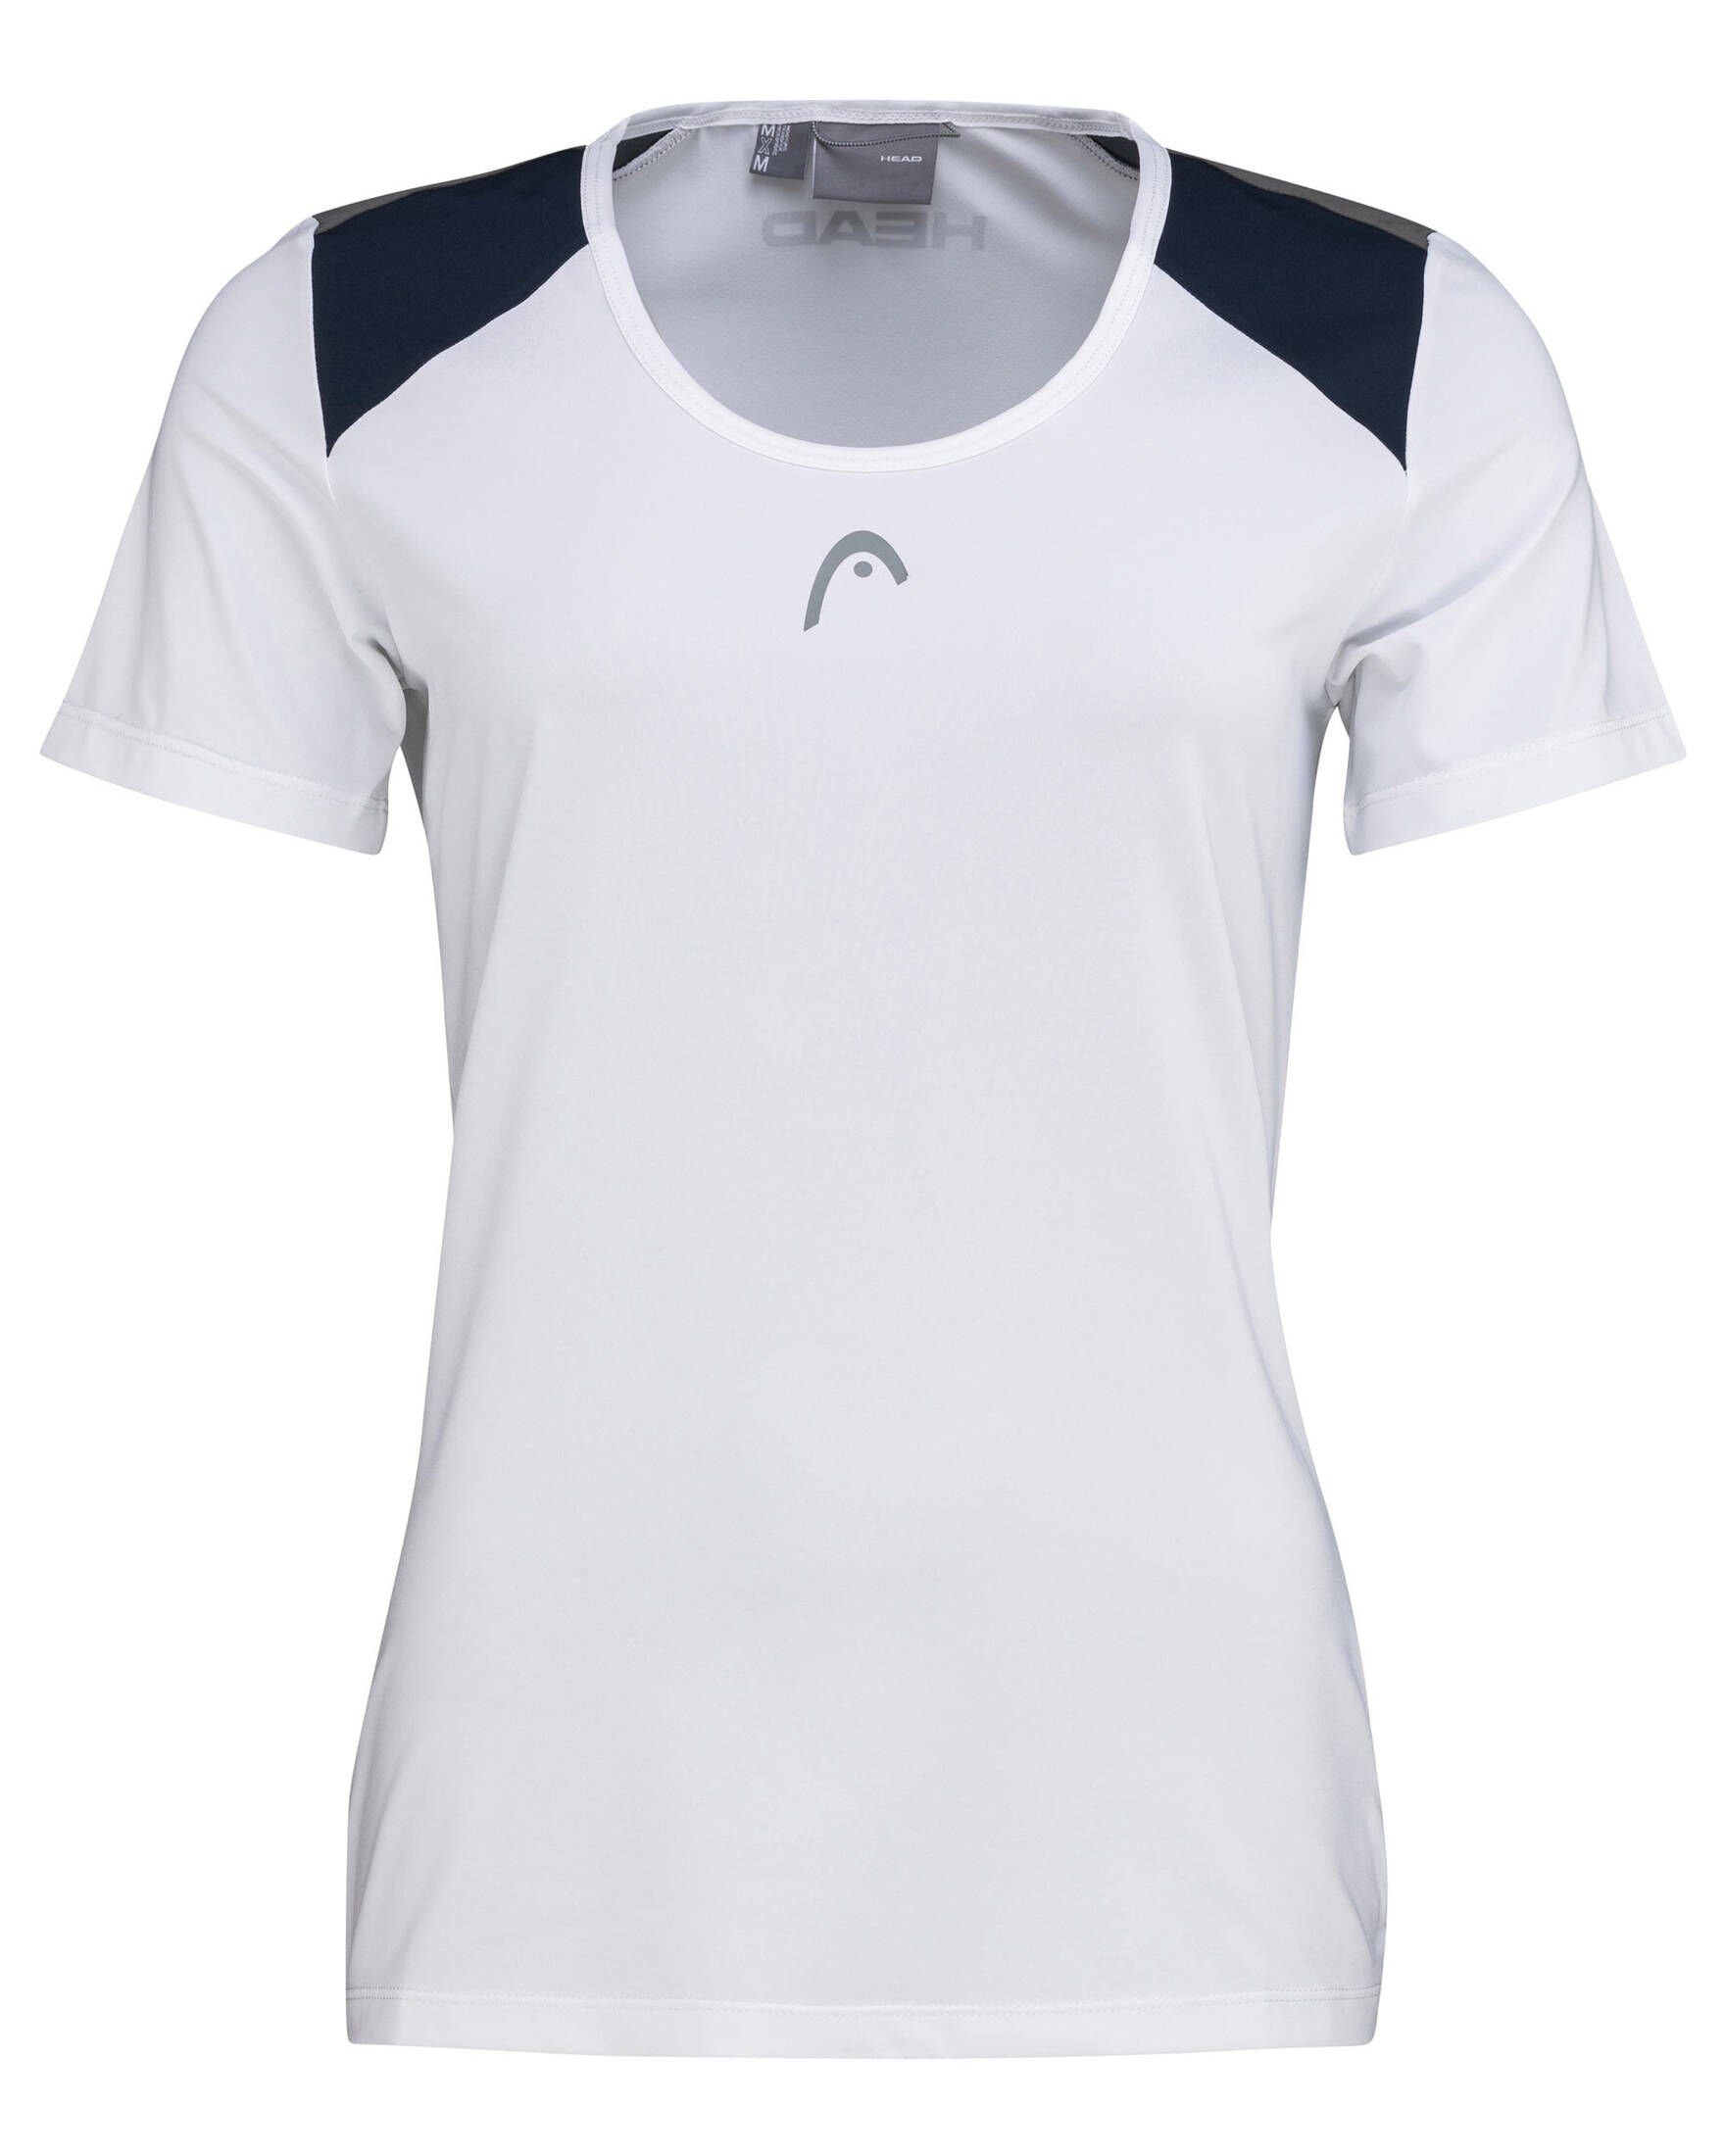 W CLUB WHDB TECH Head white/darkblue T-Shirt 22 T-SHIRT Tennisshirt Damen